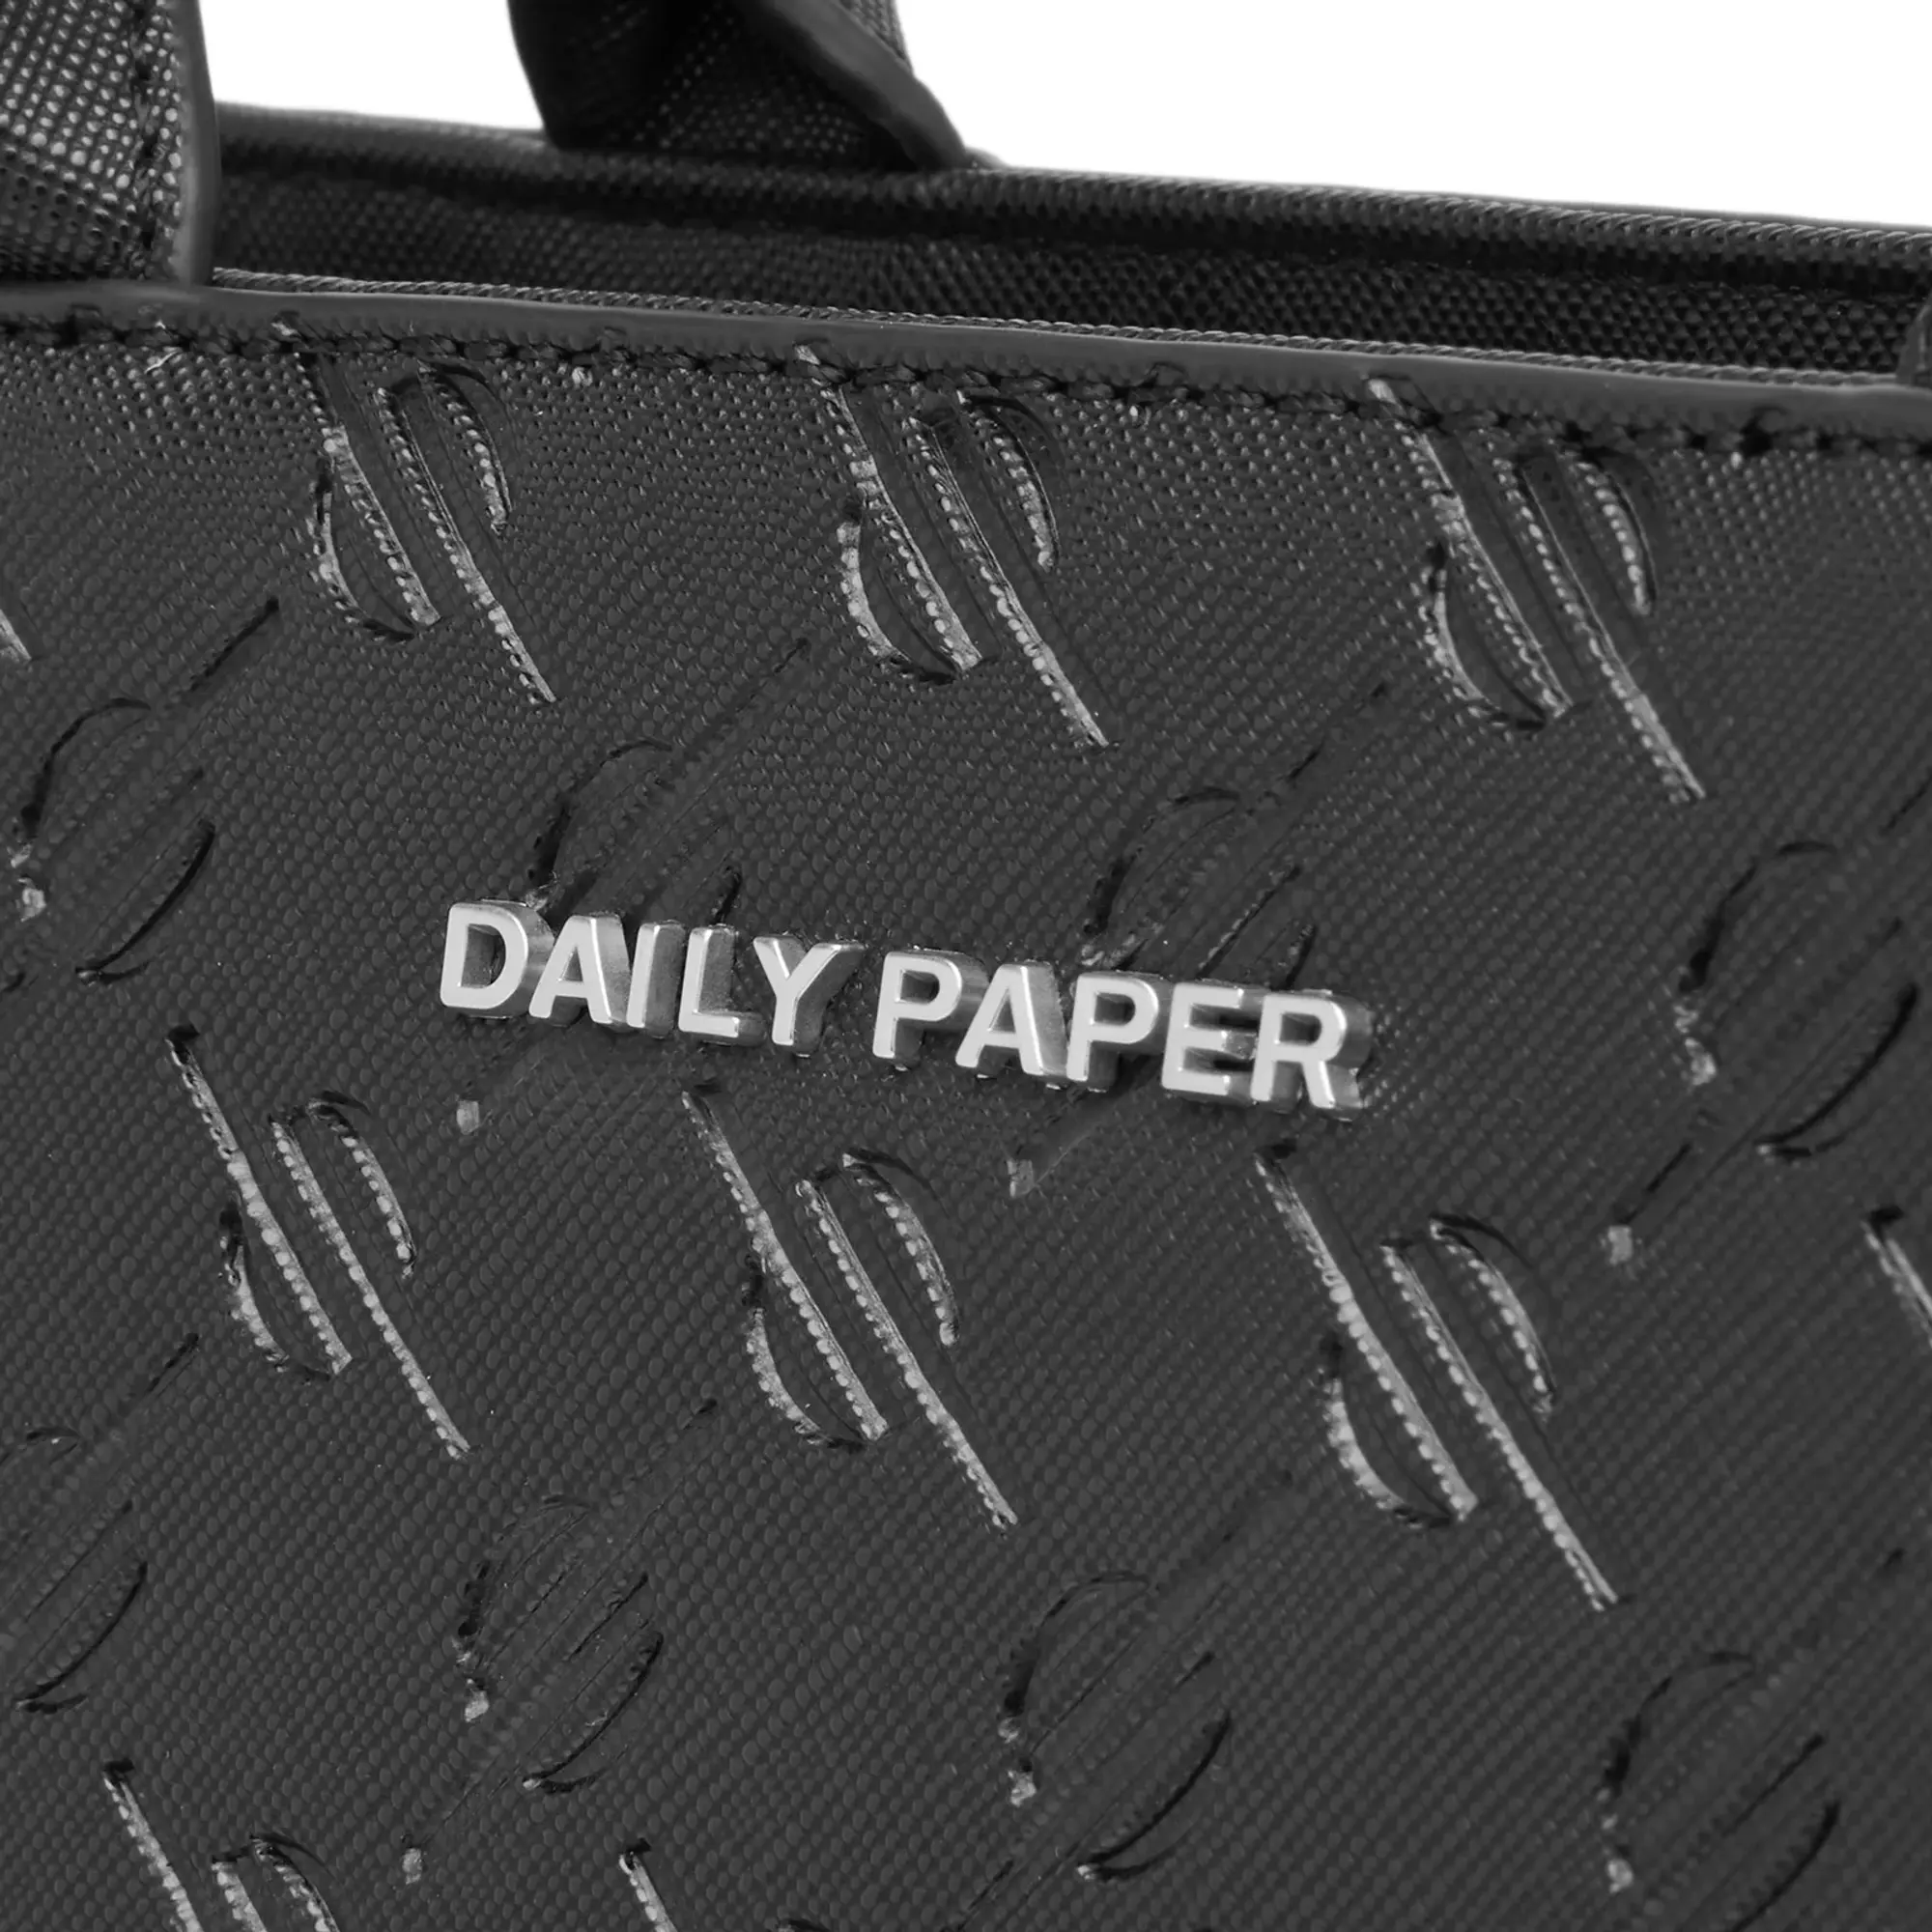 Daily Paper Men's Mileno Monogram Bag Black, 2321155